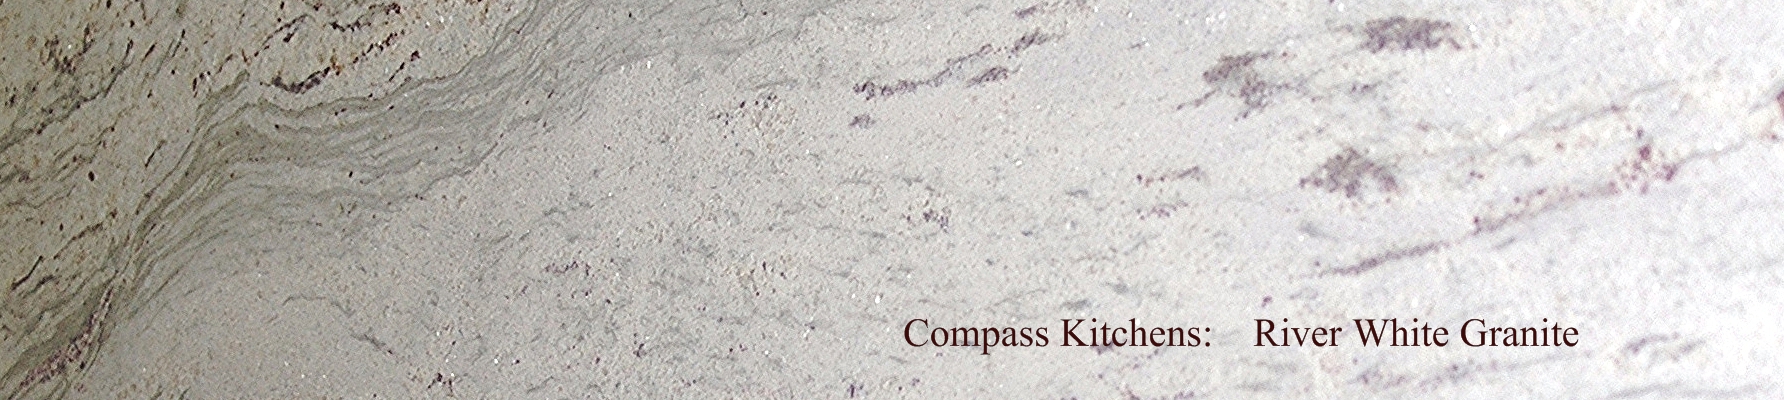 Compass Kitchens